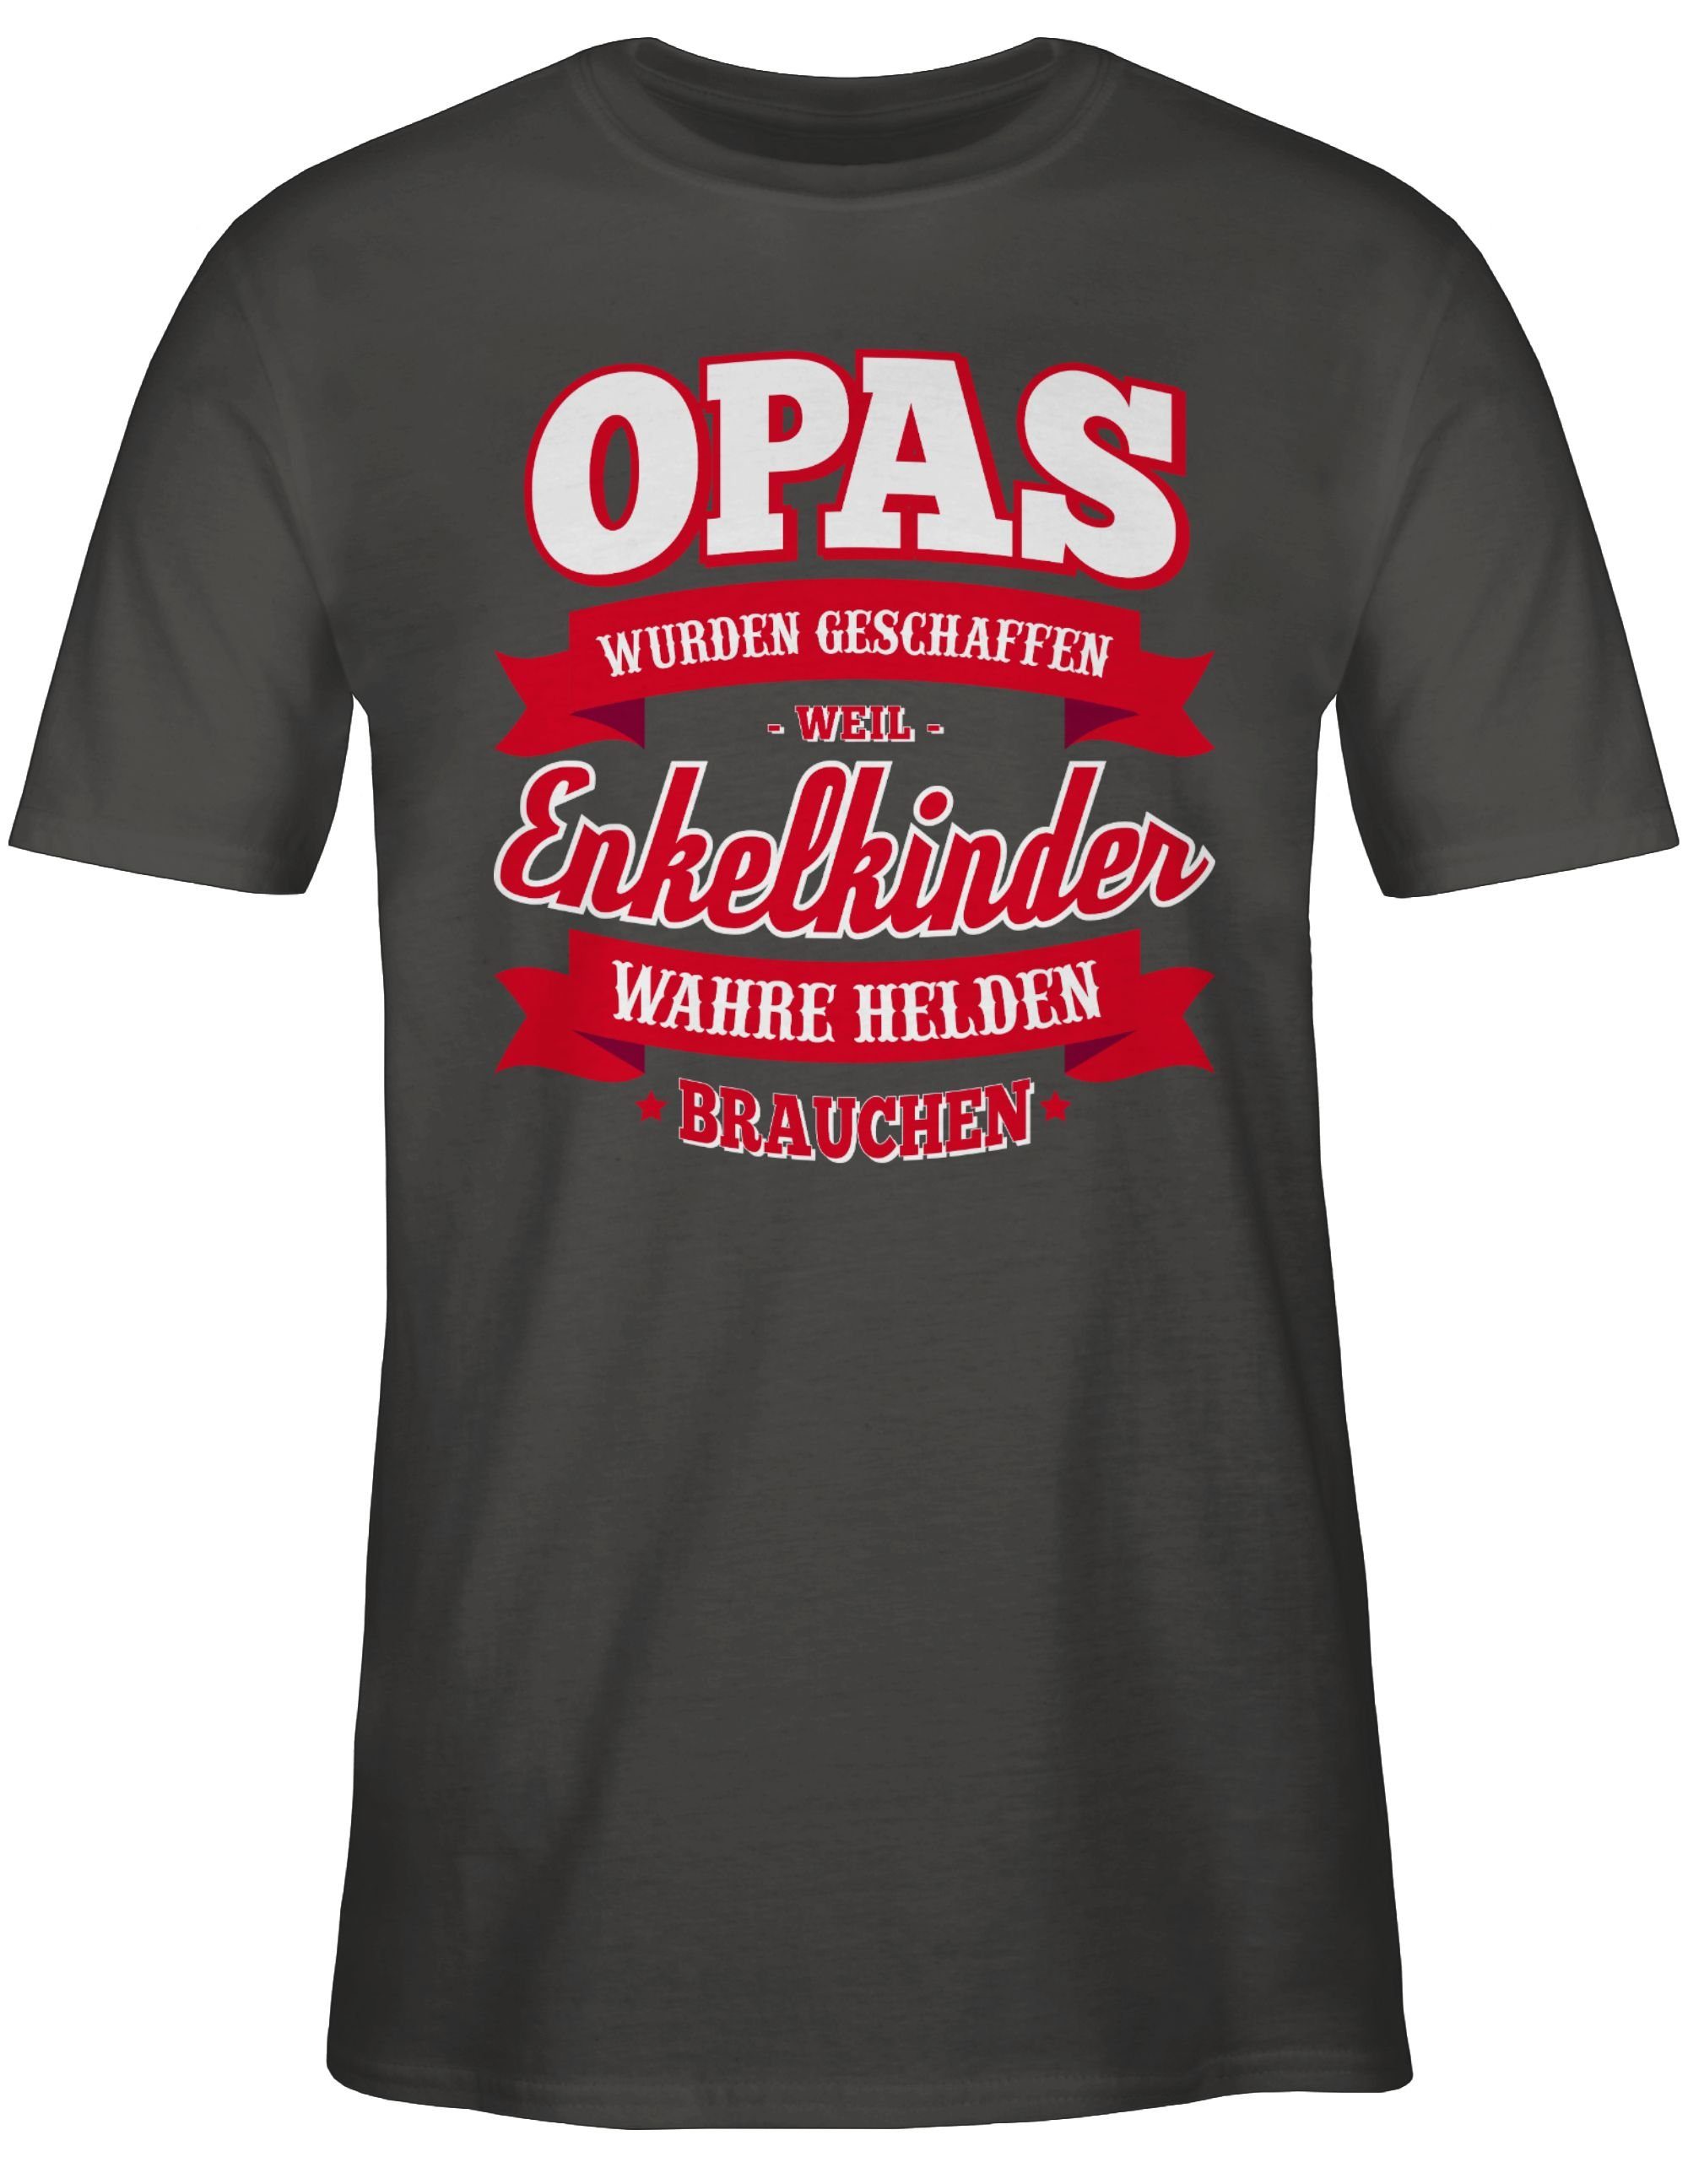 Shirtracer Opa Dunkelgrau Helden wurden Enkelkinder 3 Opas wahre Geschenke brauchen geschaffen weil T-Shirt